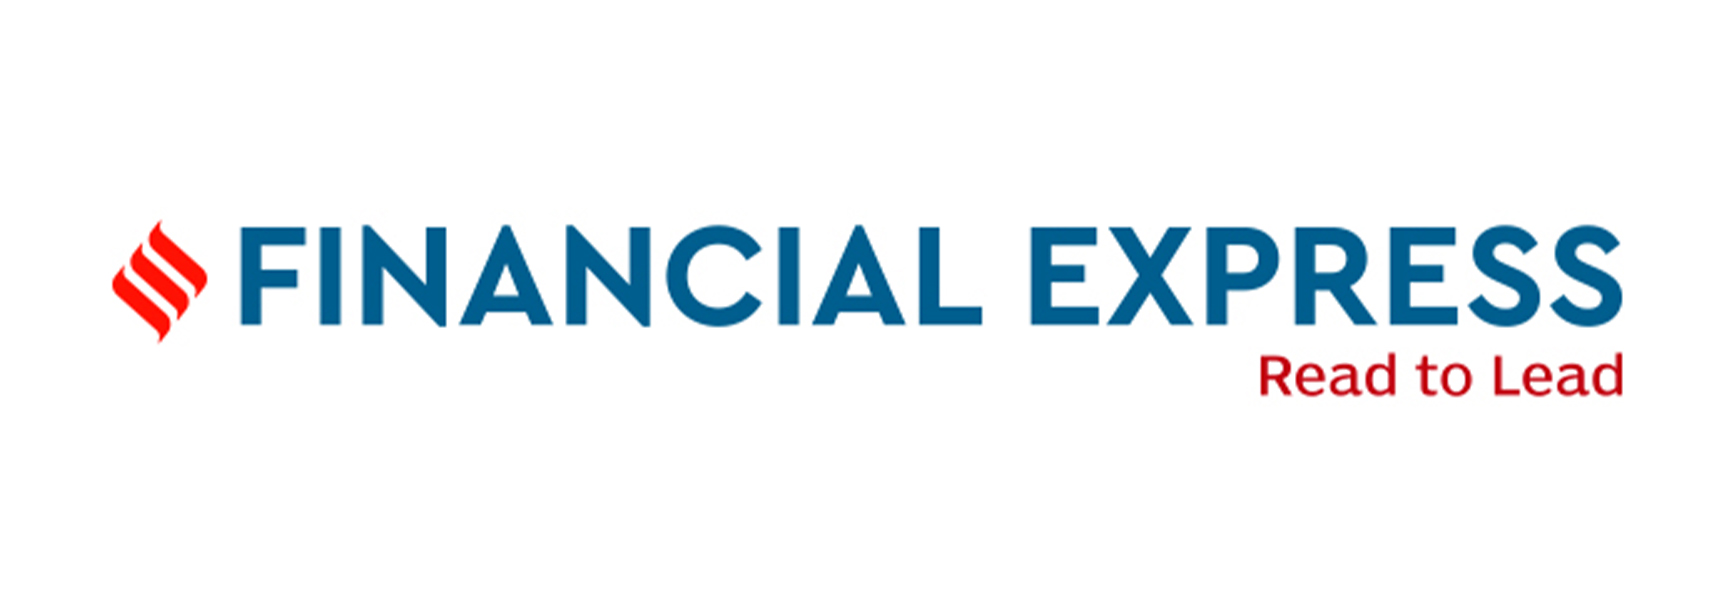 Financial Express India